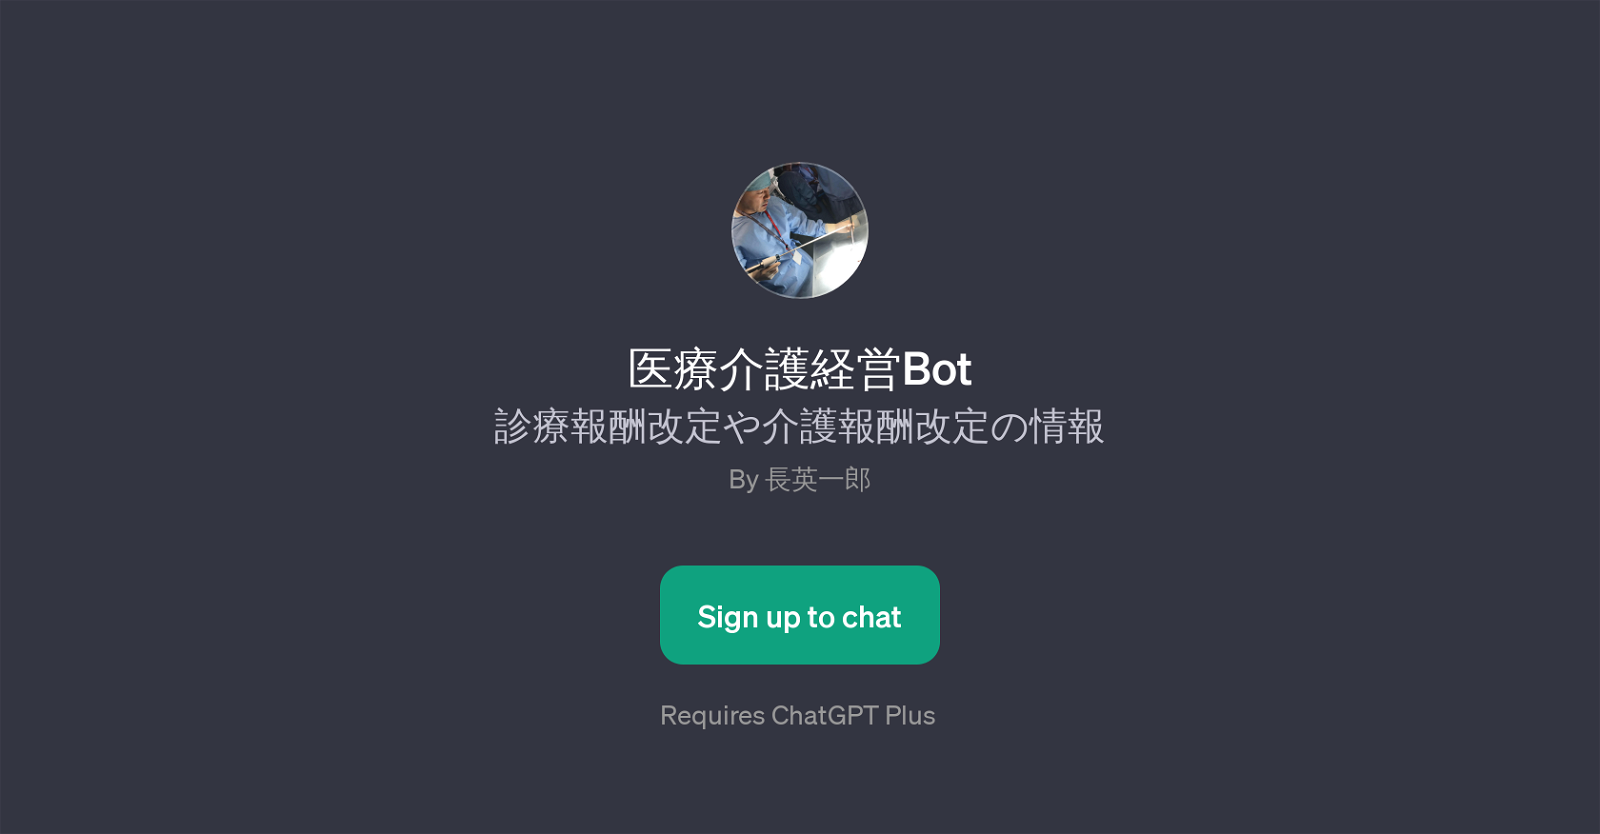 Bot website